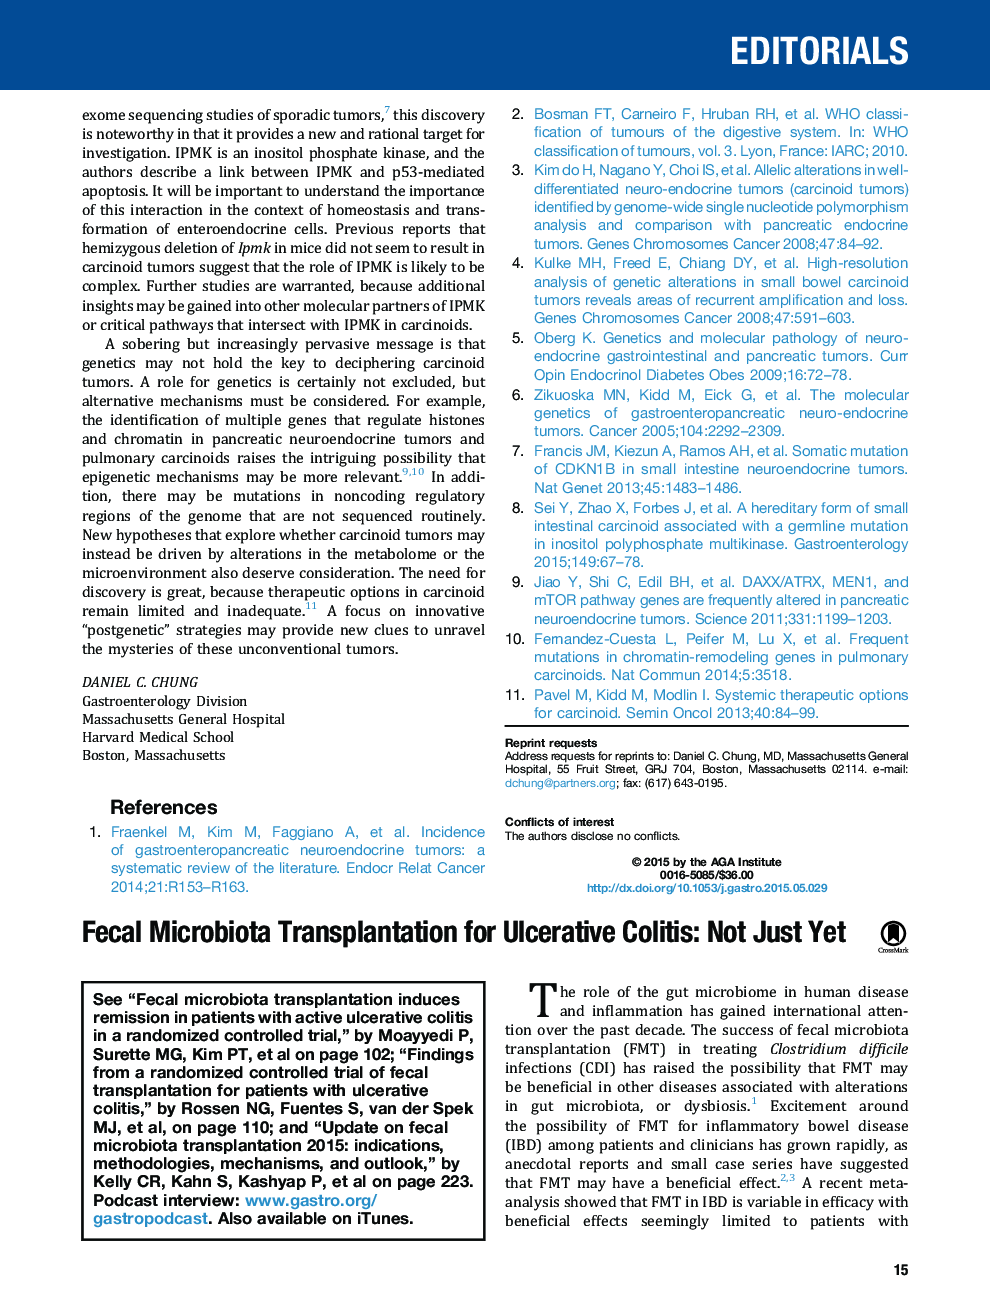 Fecal Microbiota Transplantation for Ulcerative Colitis: Not Just Yet